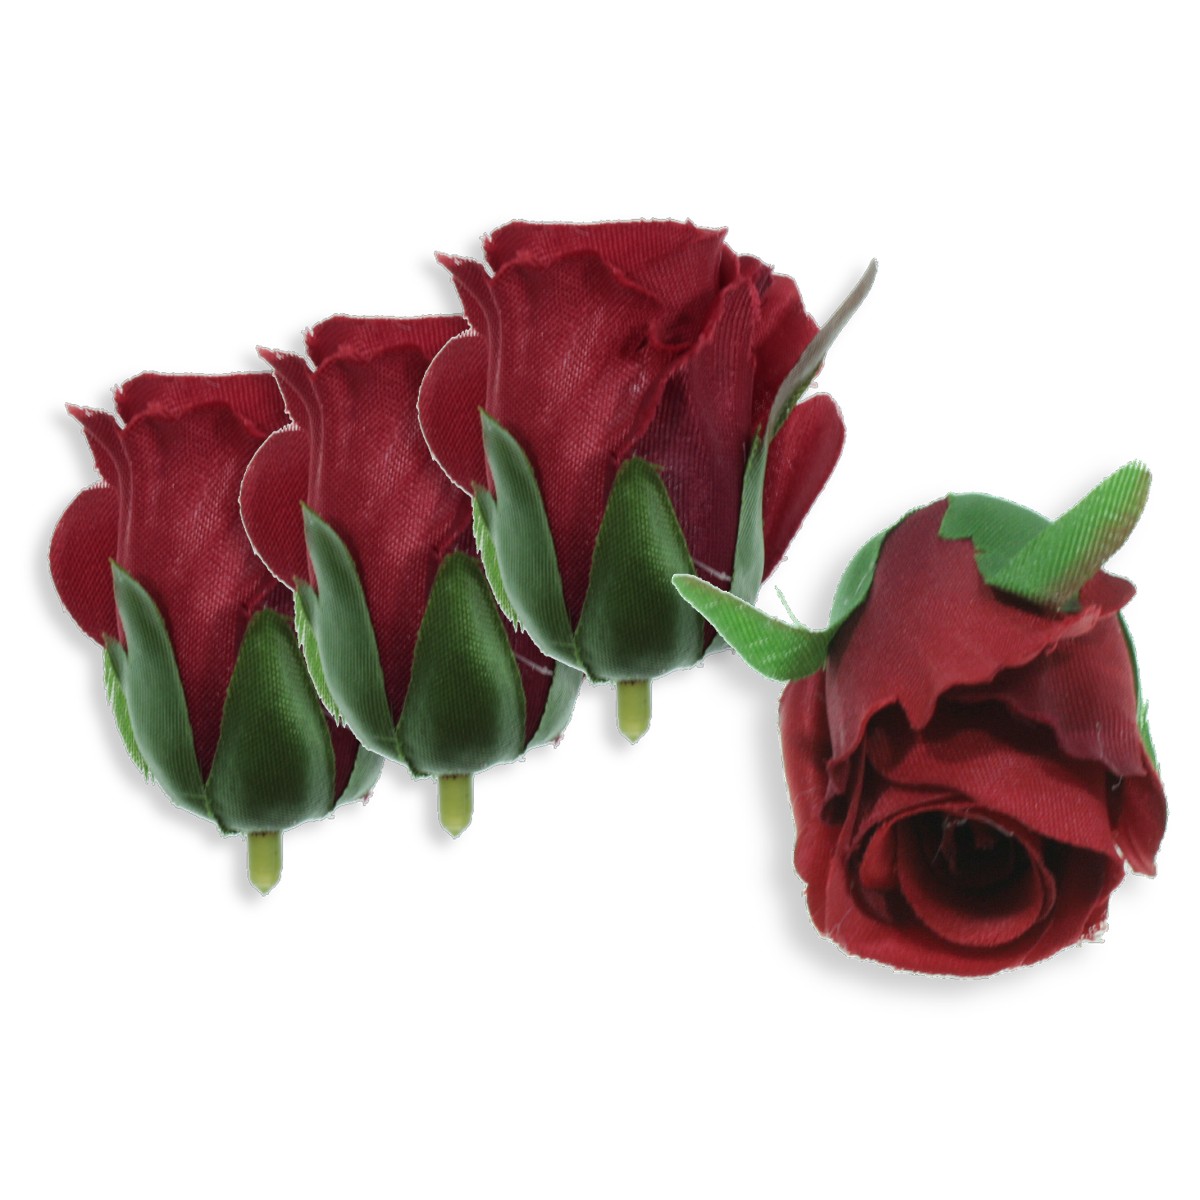 Cap trandafir boboc textil rosu 3 5x4 5cm 4 set